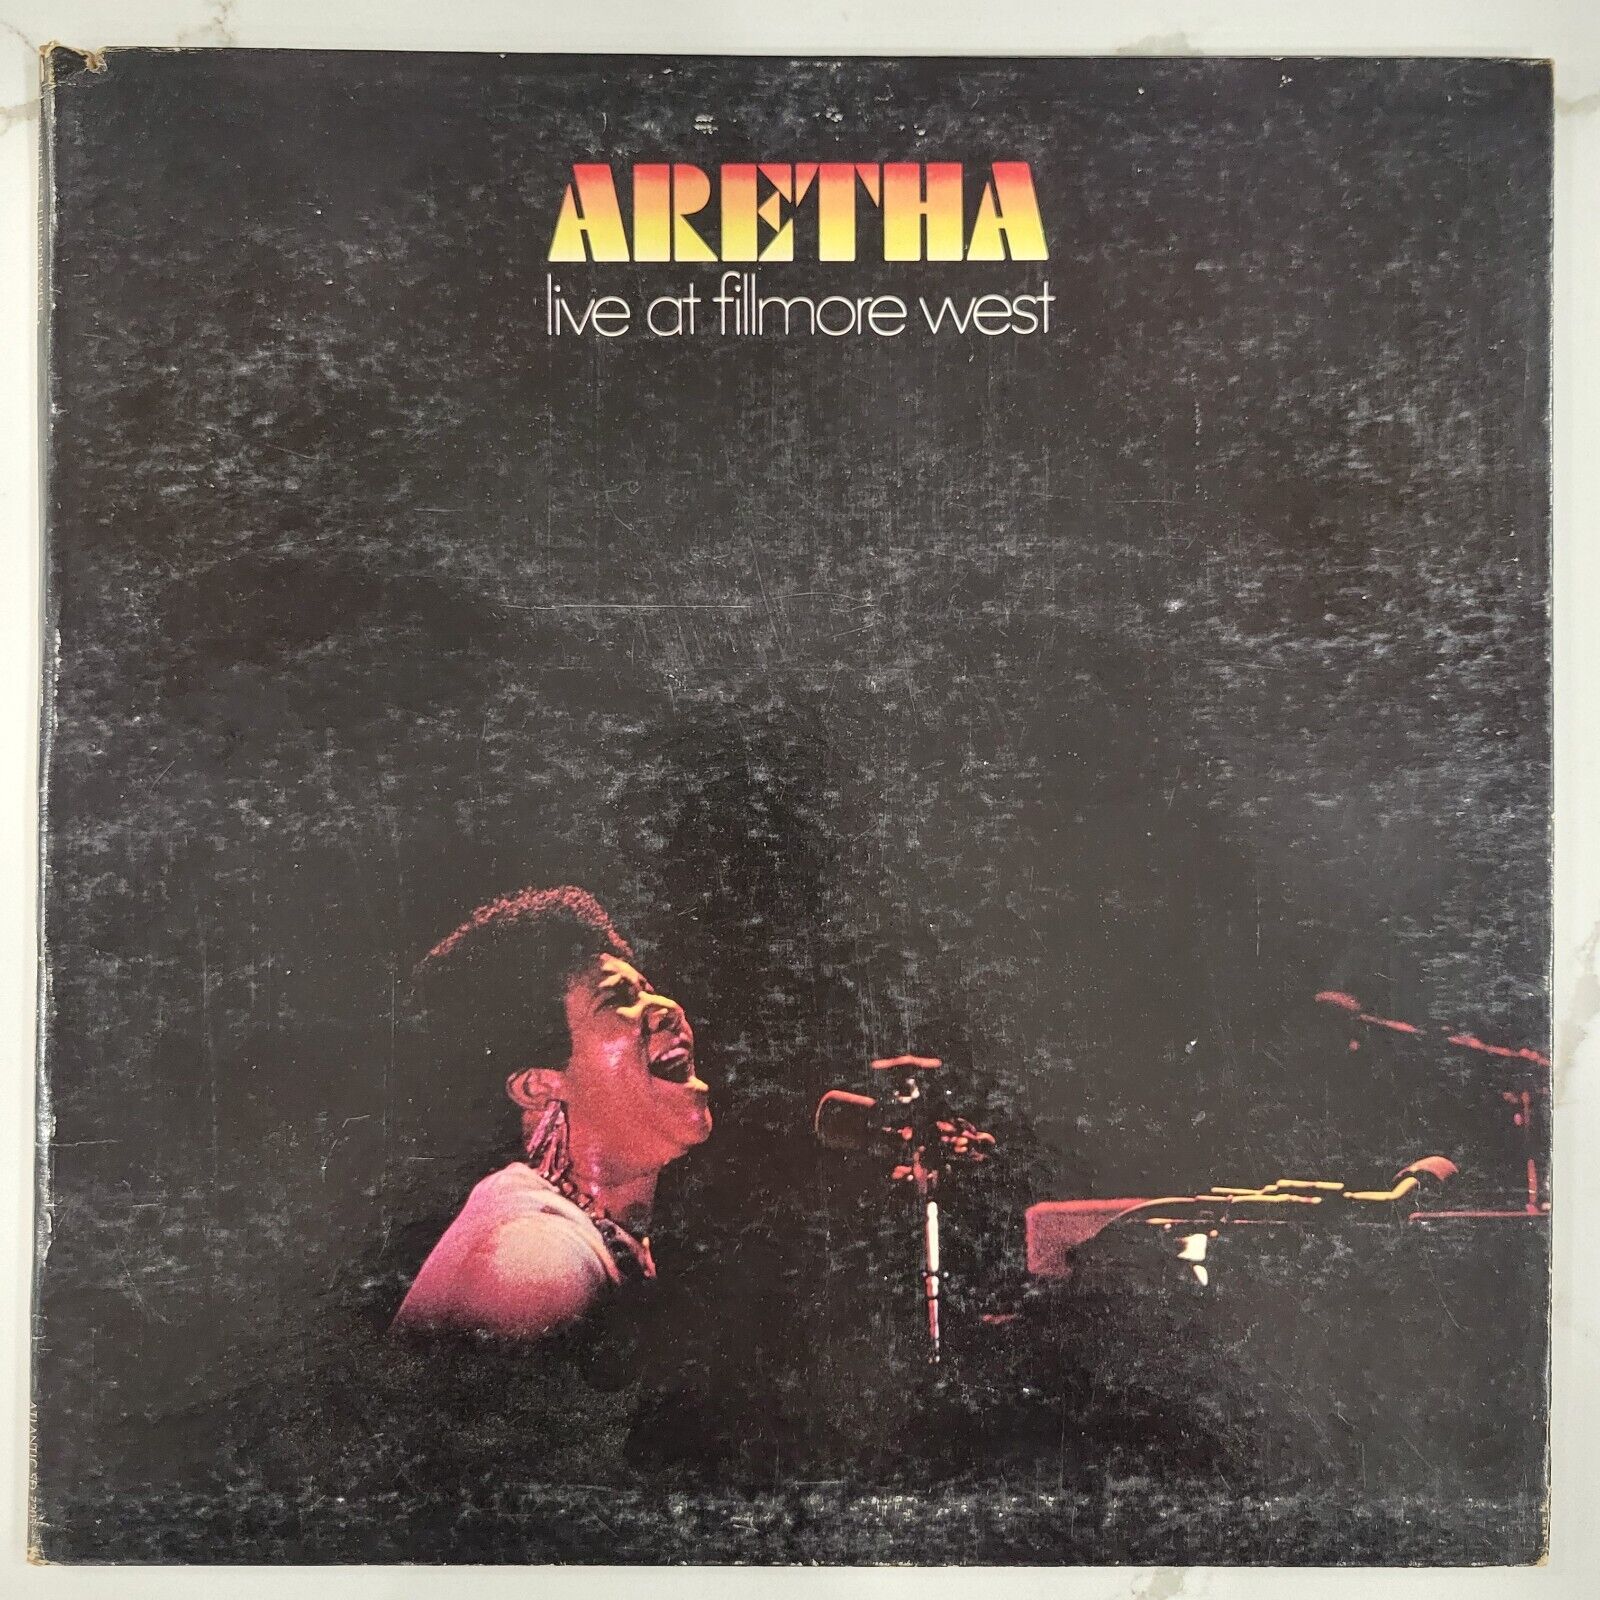 Aretha Franklin - Live At Fillmore West Vinyl LP - 1971 - Atlantic SD 7205